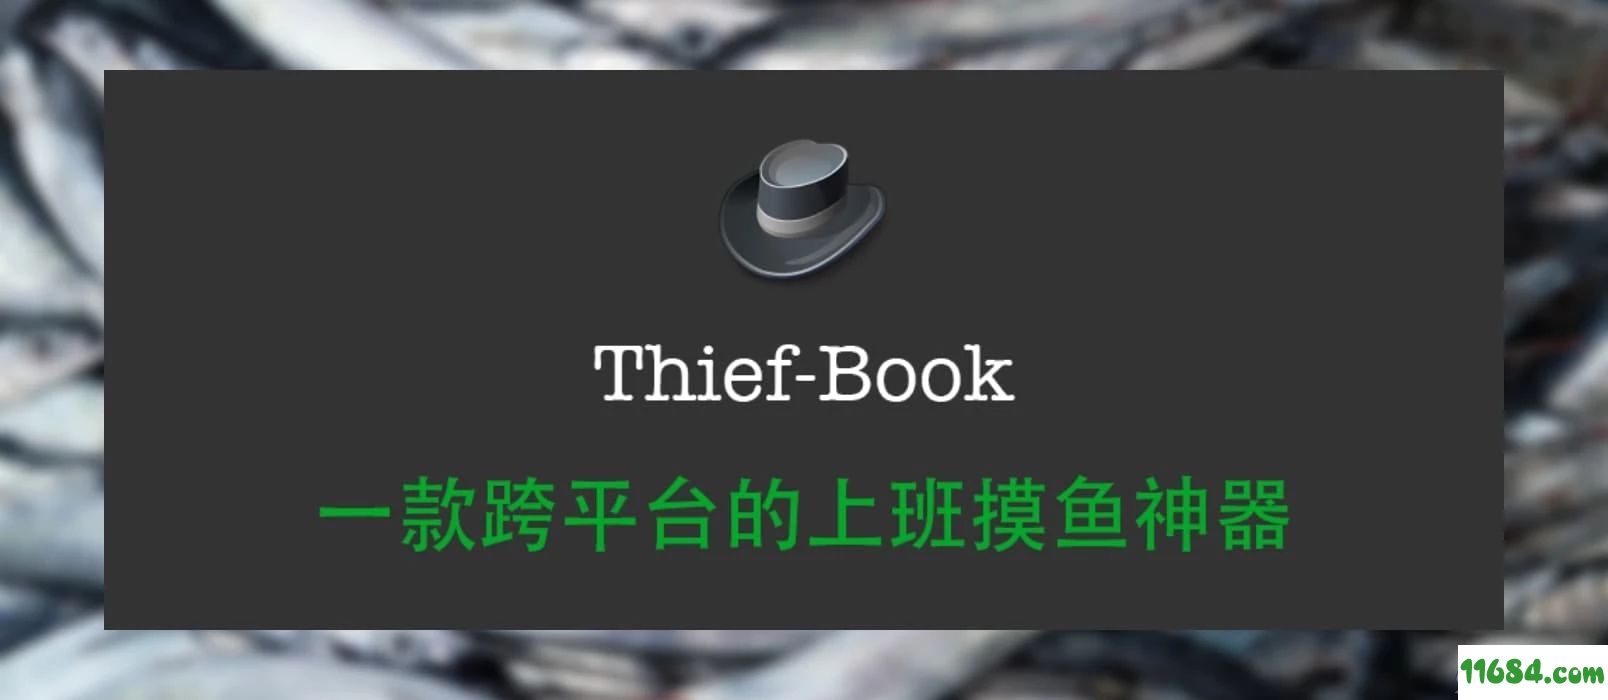 Thief book下载-电子阅读器Thief book v3.0 最新版下载